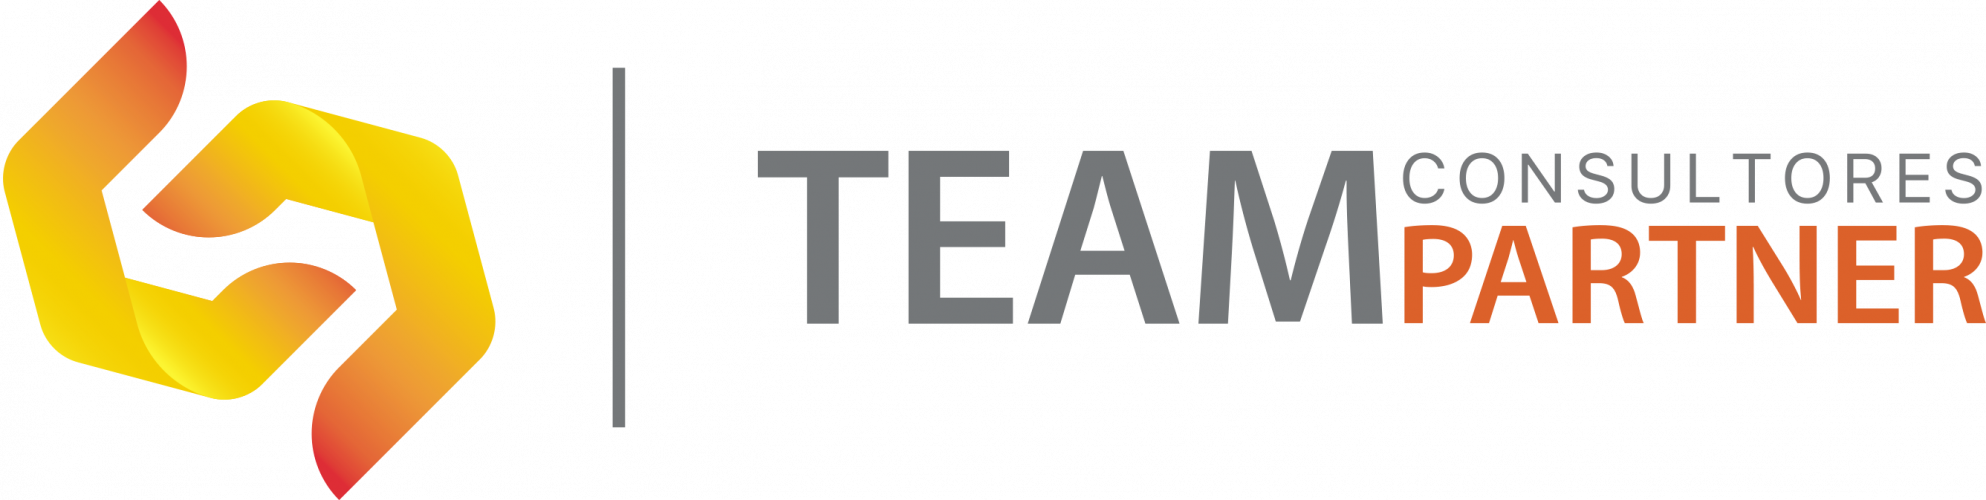 logo teampartner